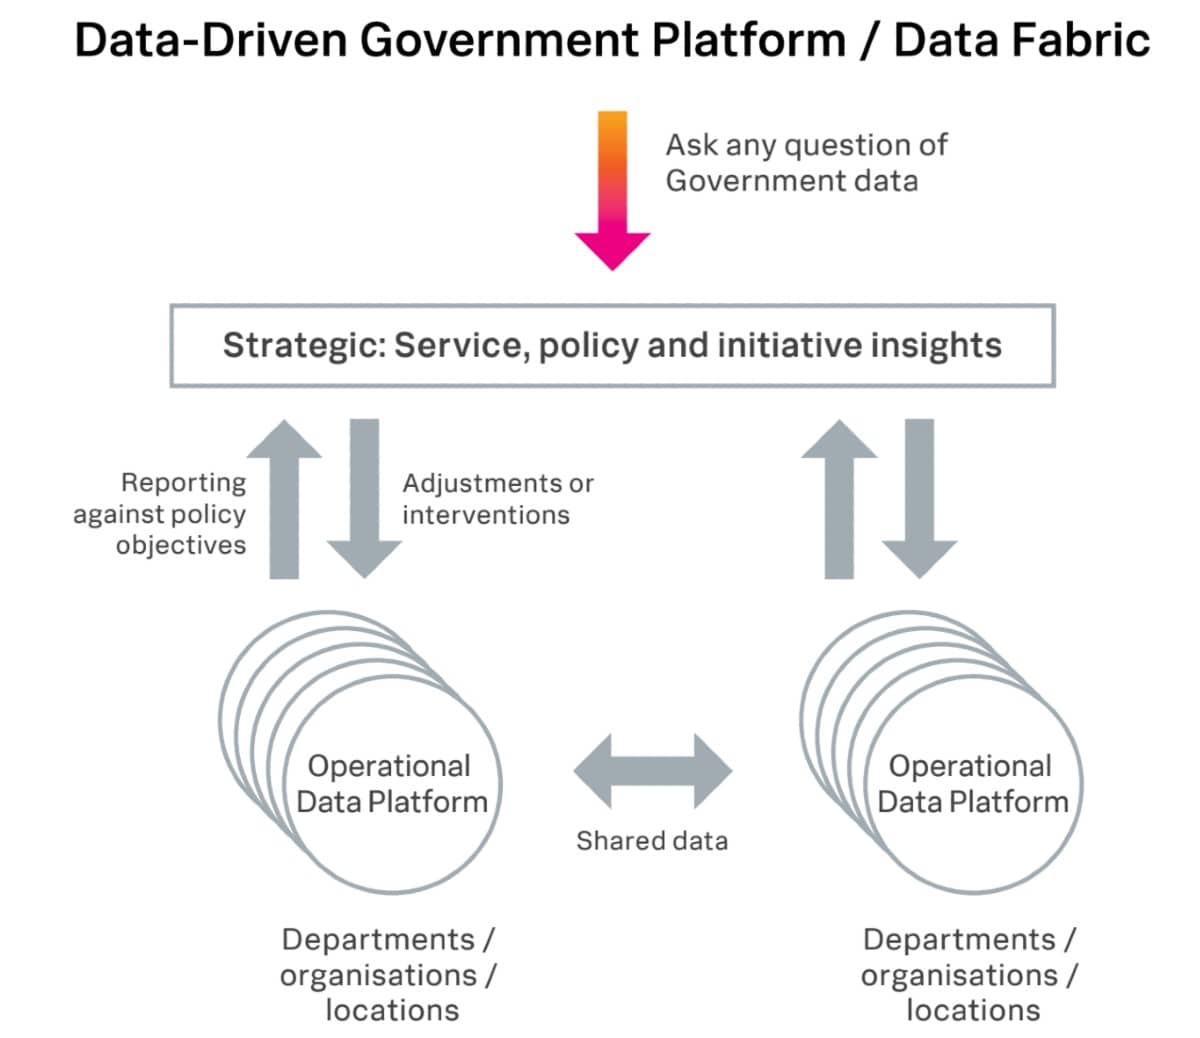 Data-driven government platform